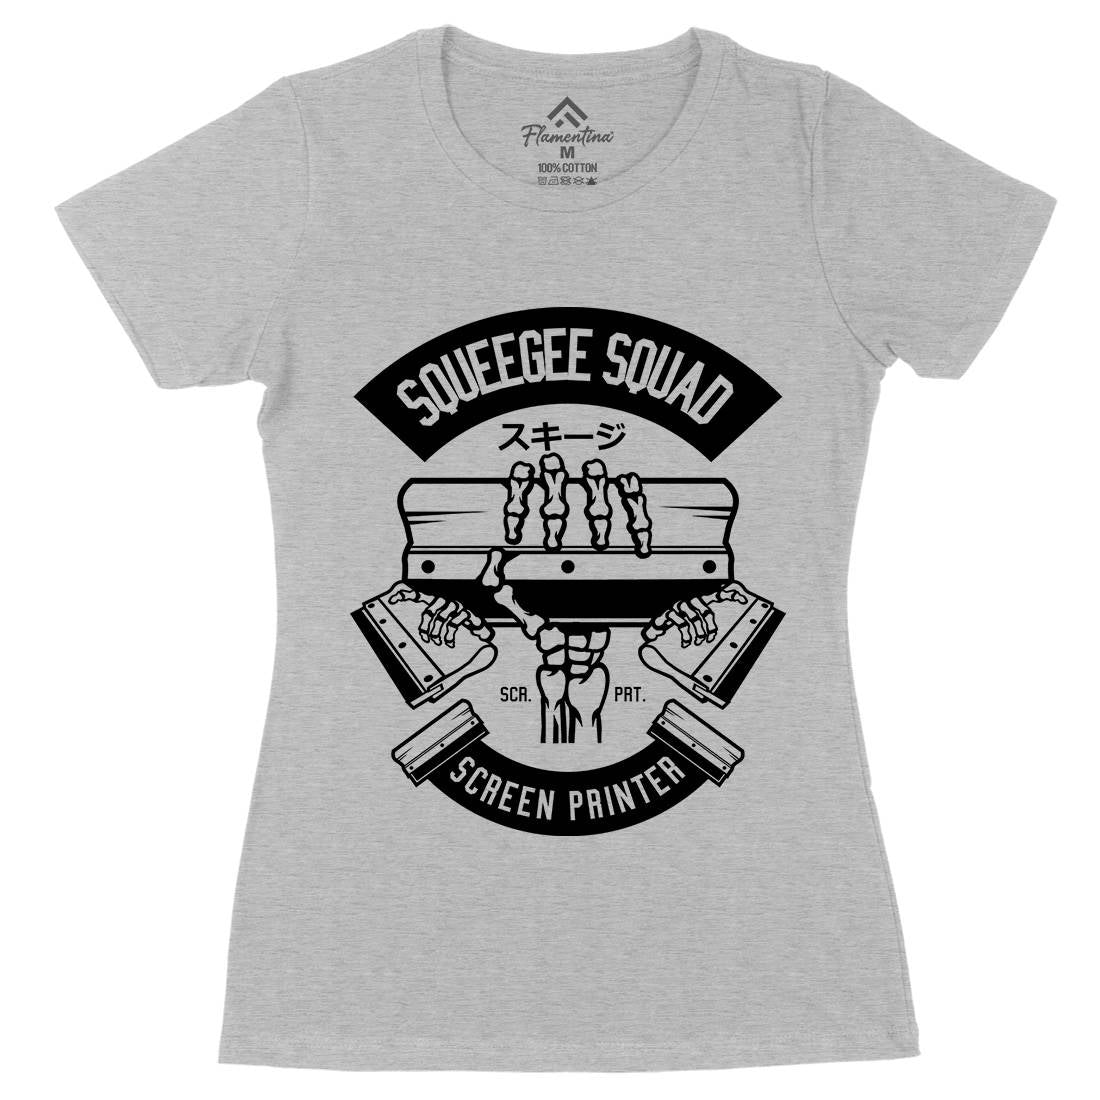 Squeegee Squad Womens Organic Crew Neck T-Shirt Retro B642